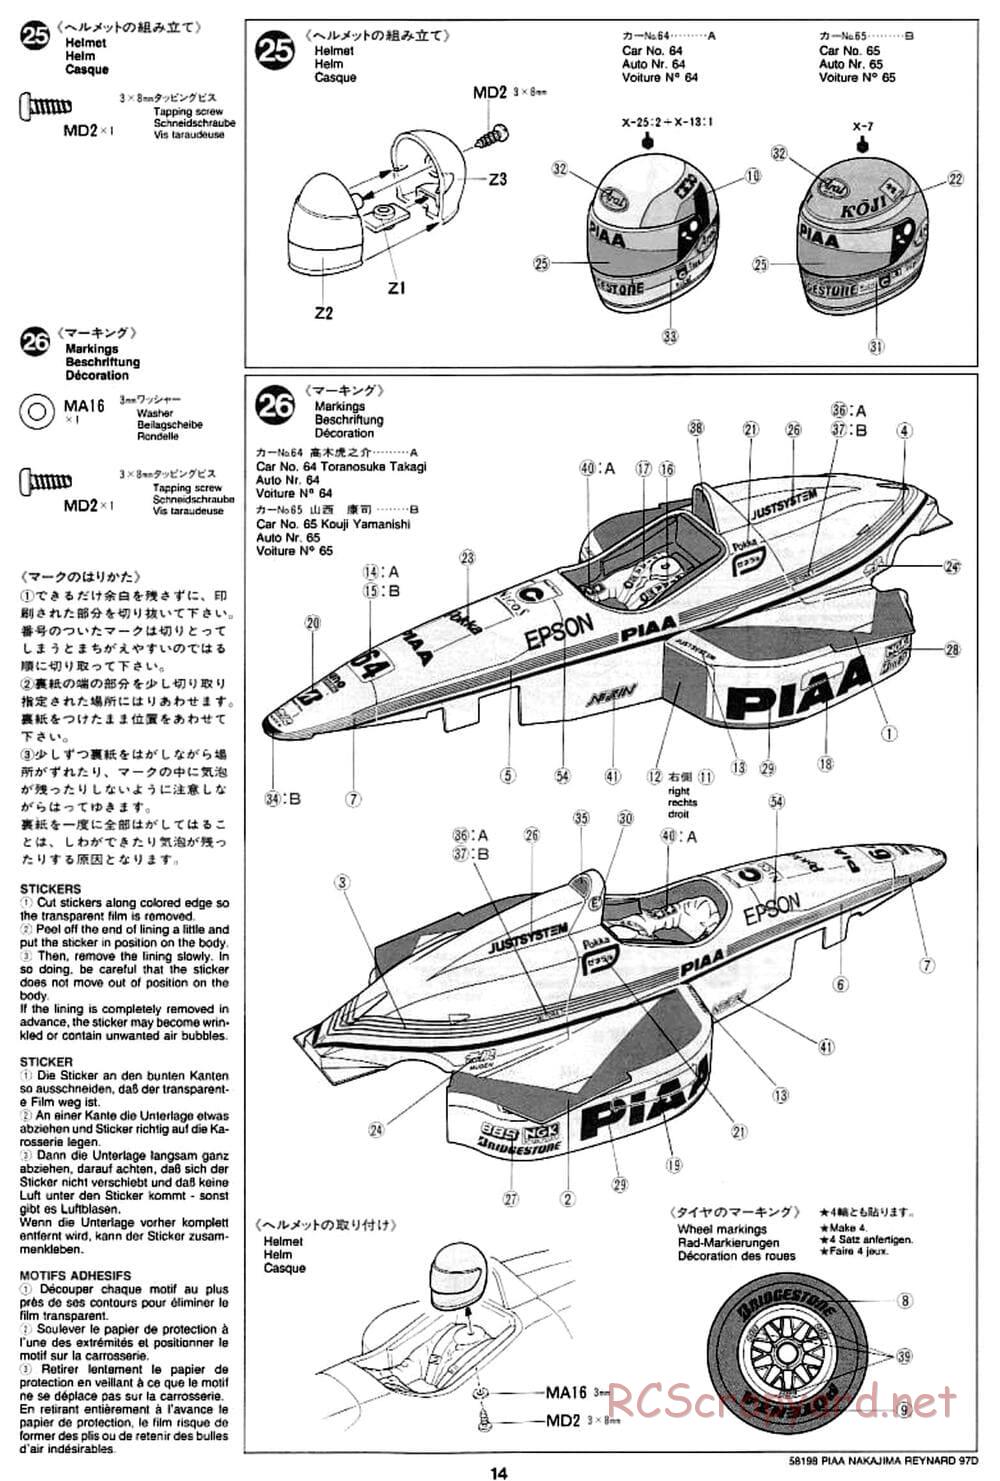 Tamiya - PIAA Nakajima Reynard 97D - F103 Chassis - Manuel - Page 14